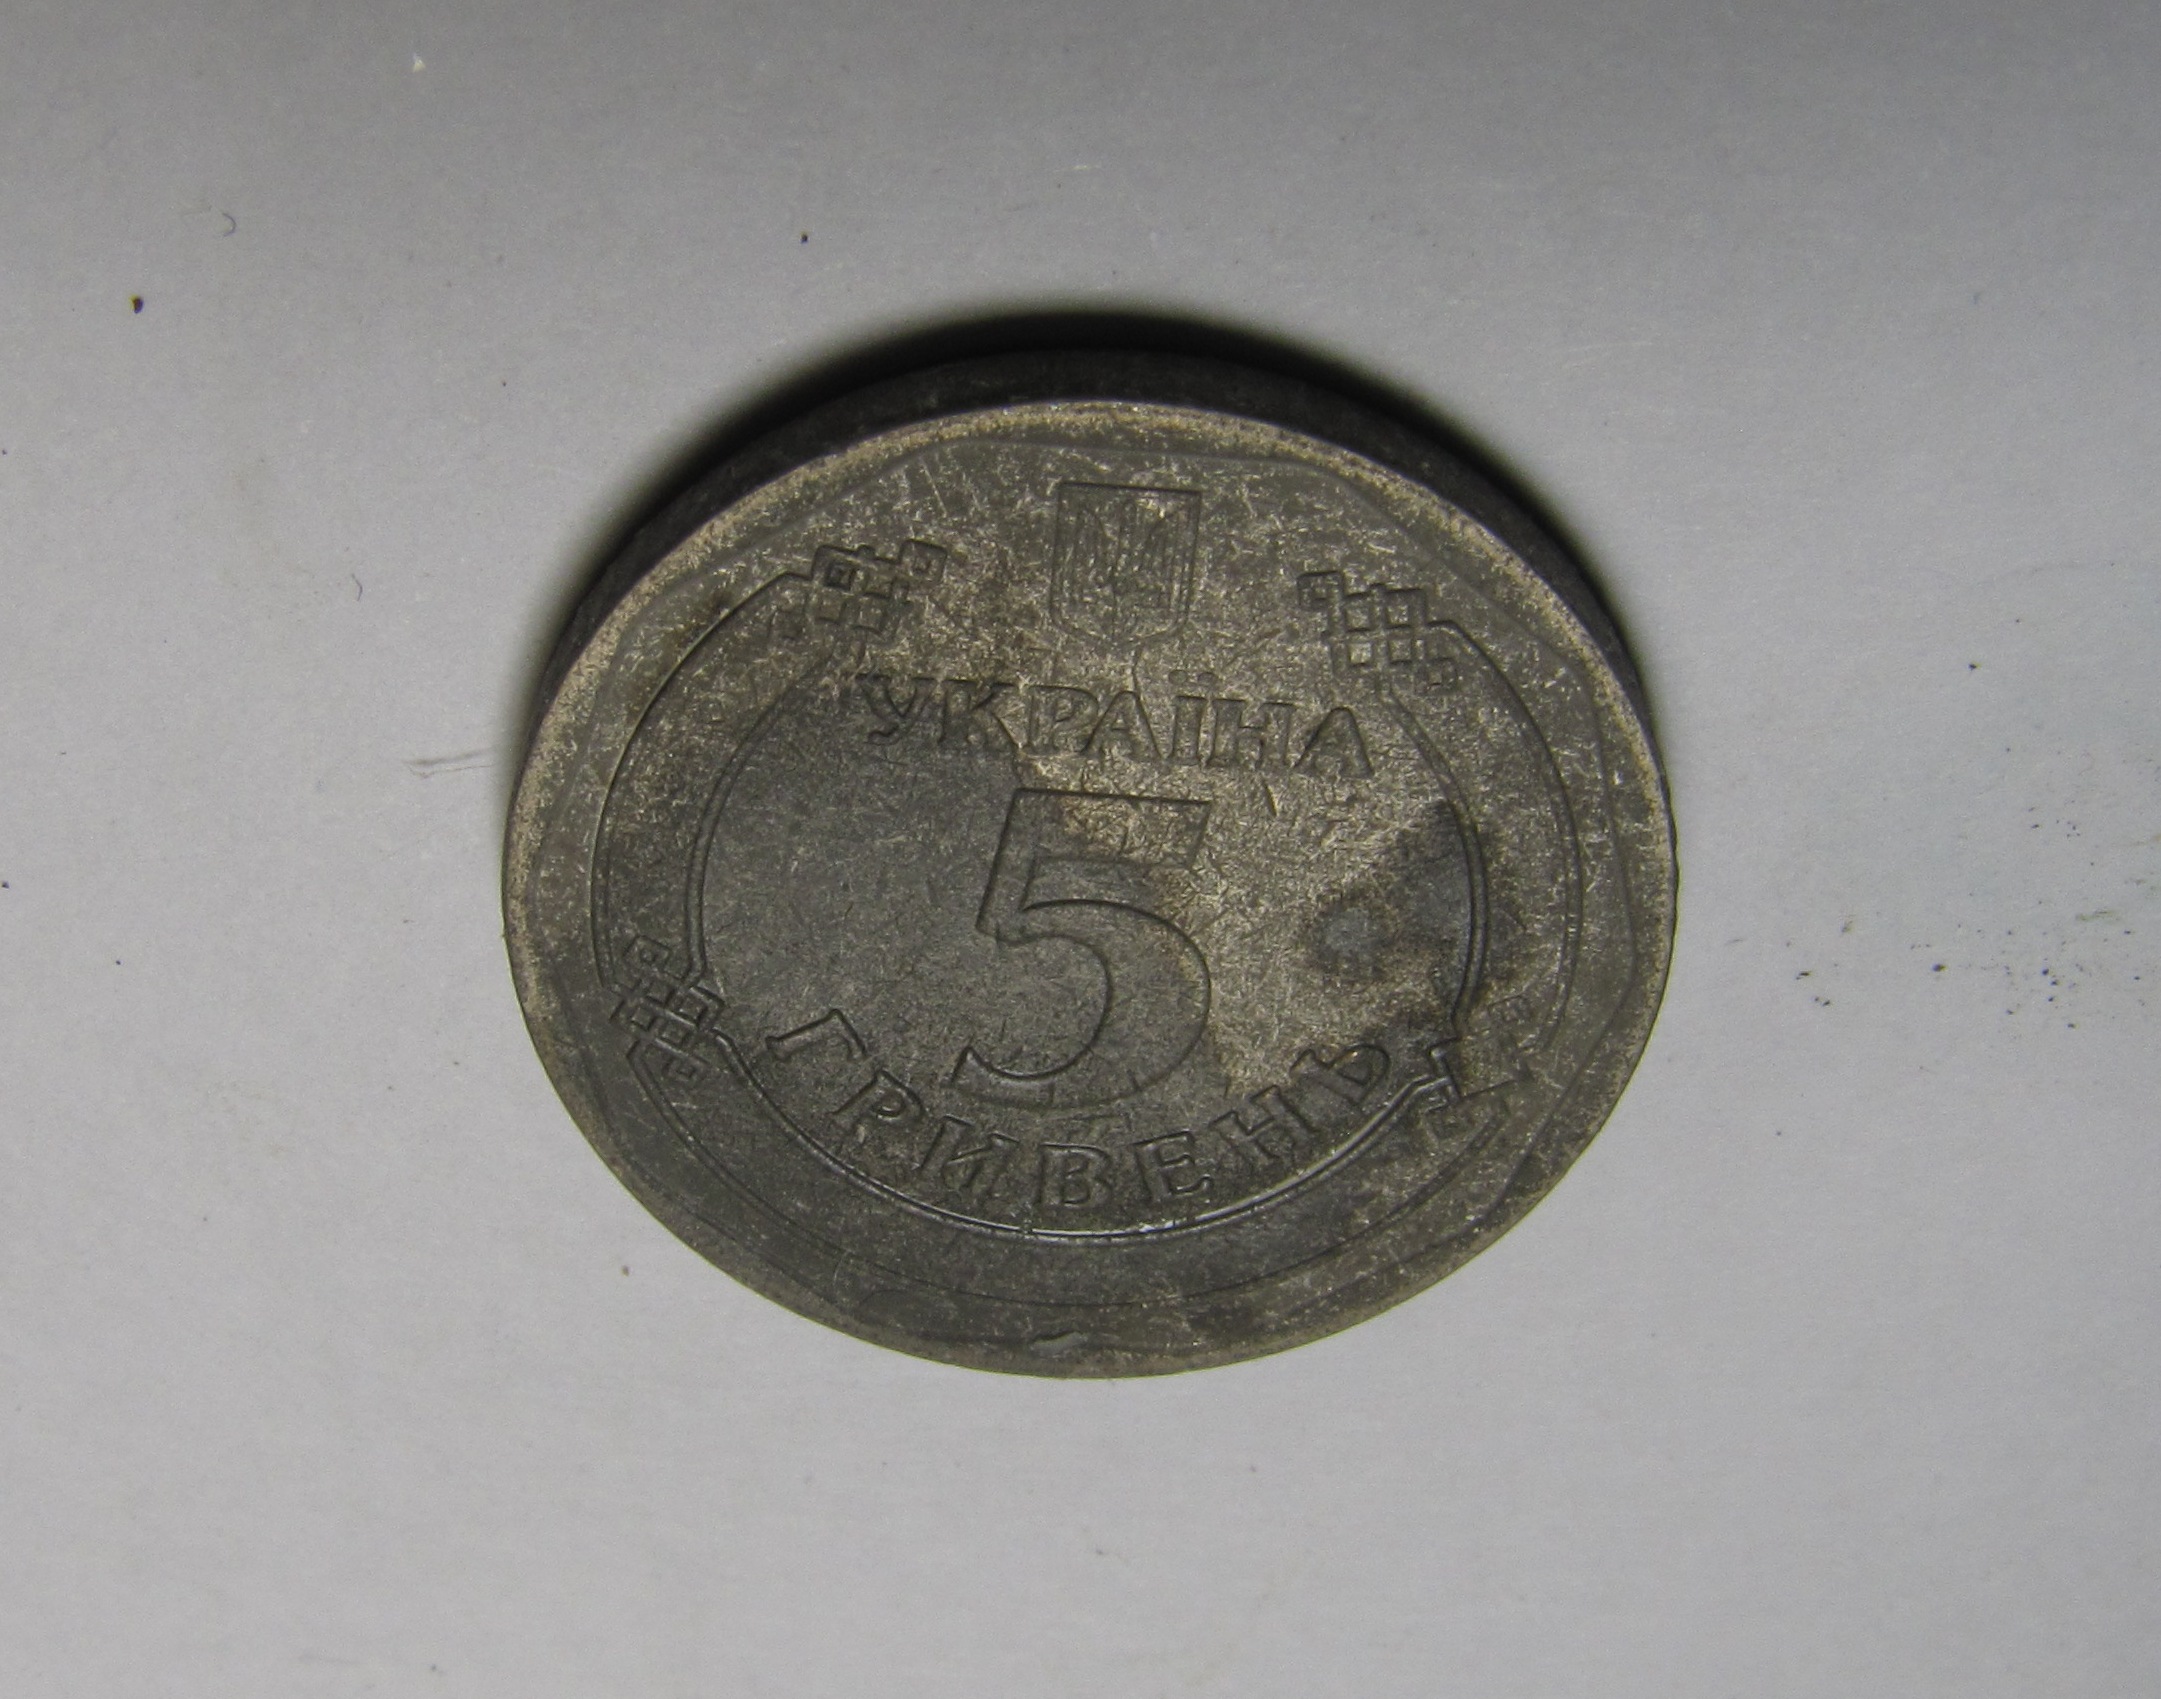 Ukrainian coins of 2 and 5 hryvnias and hydrochloric acid - pt.5. Украинские монеты 2 и 5 гривен и соляная кислота